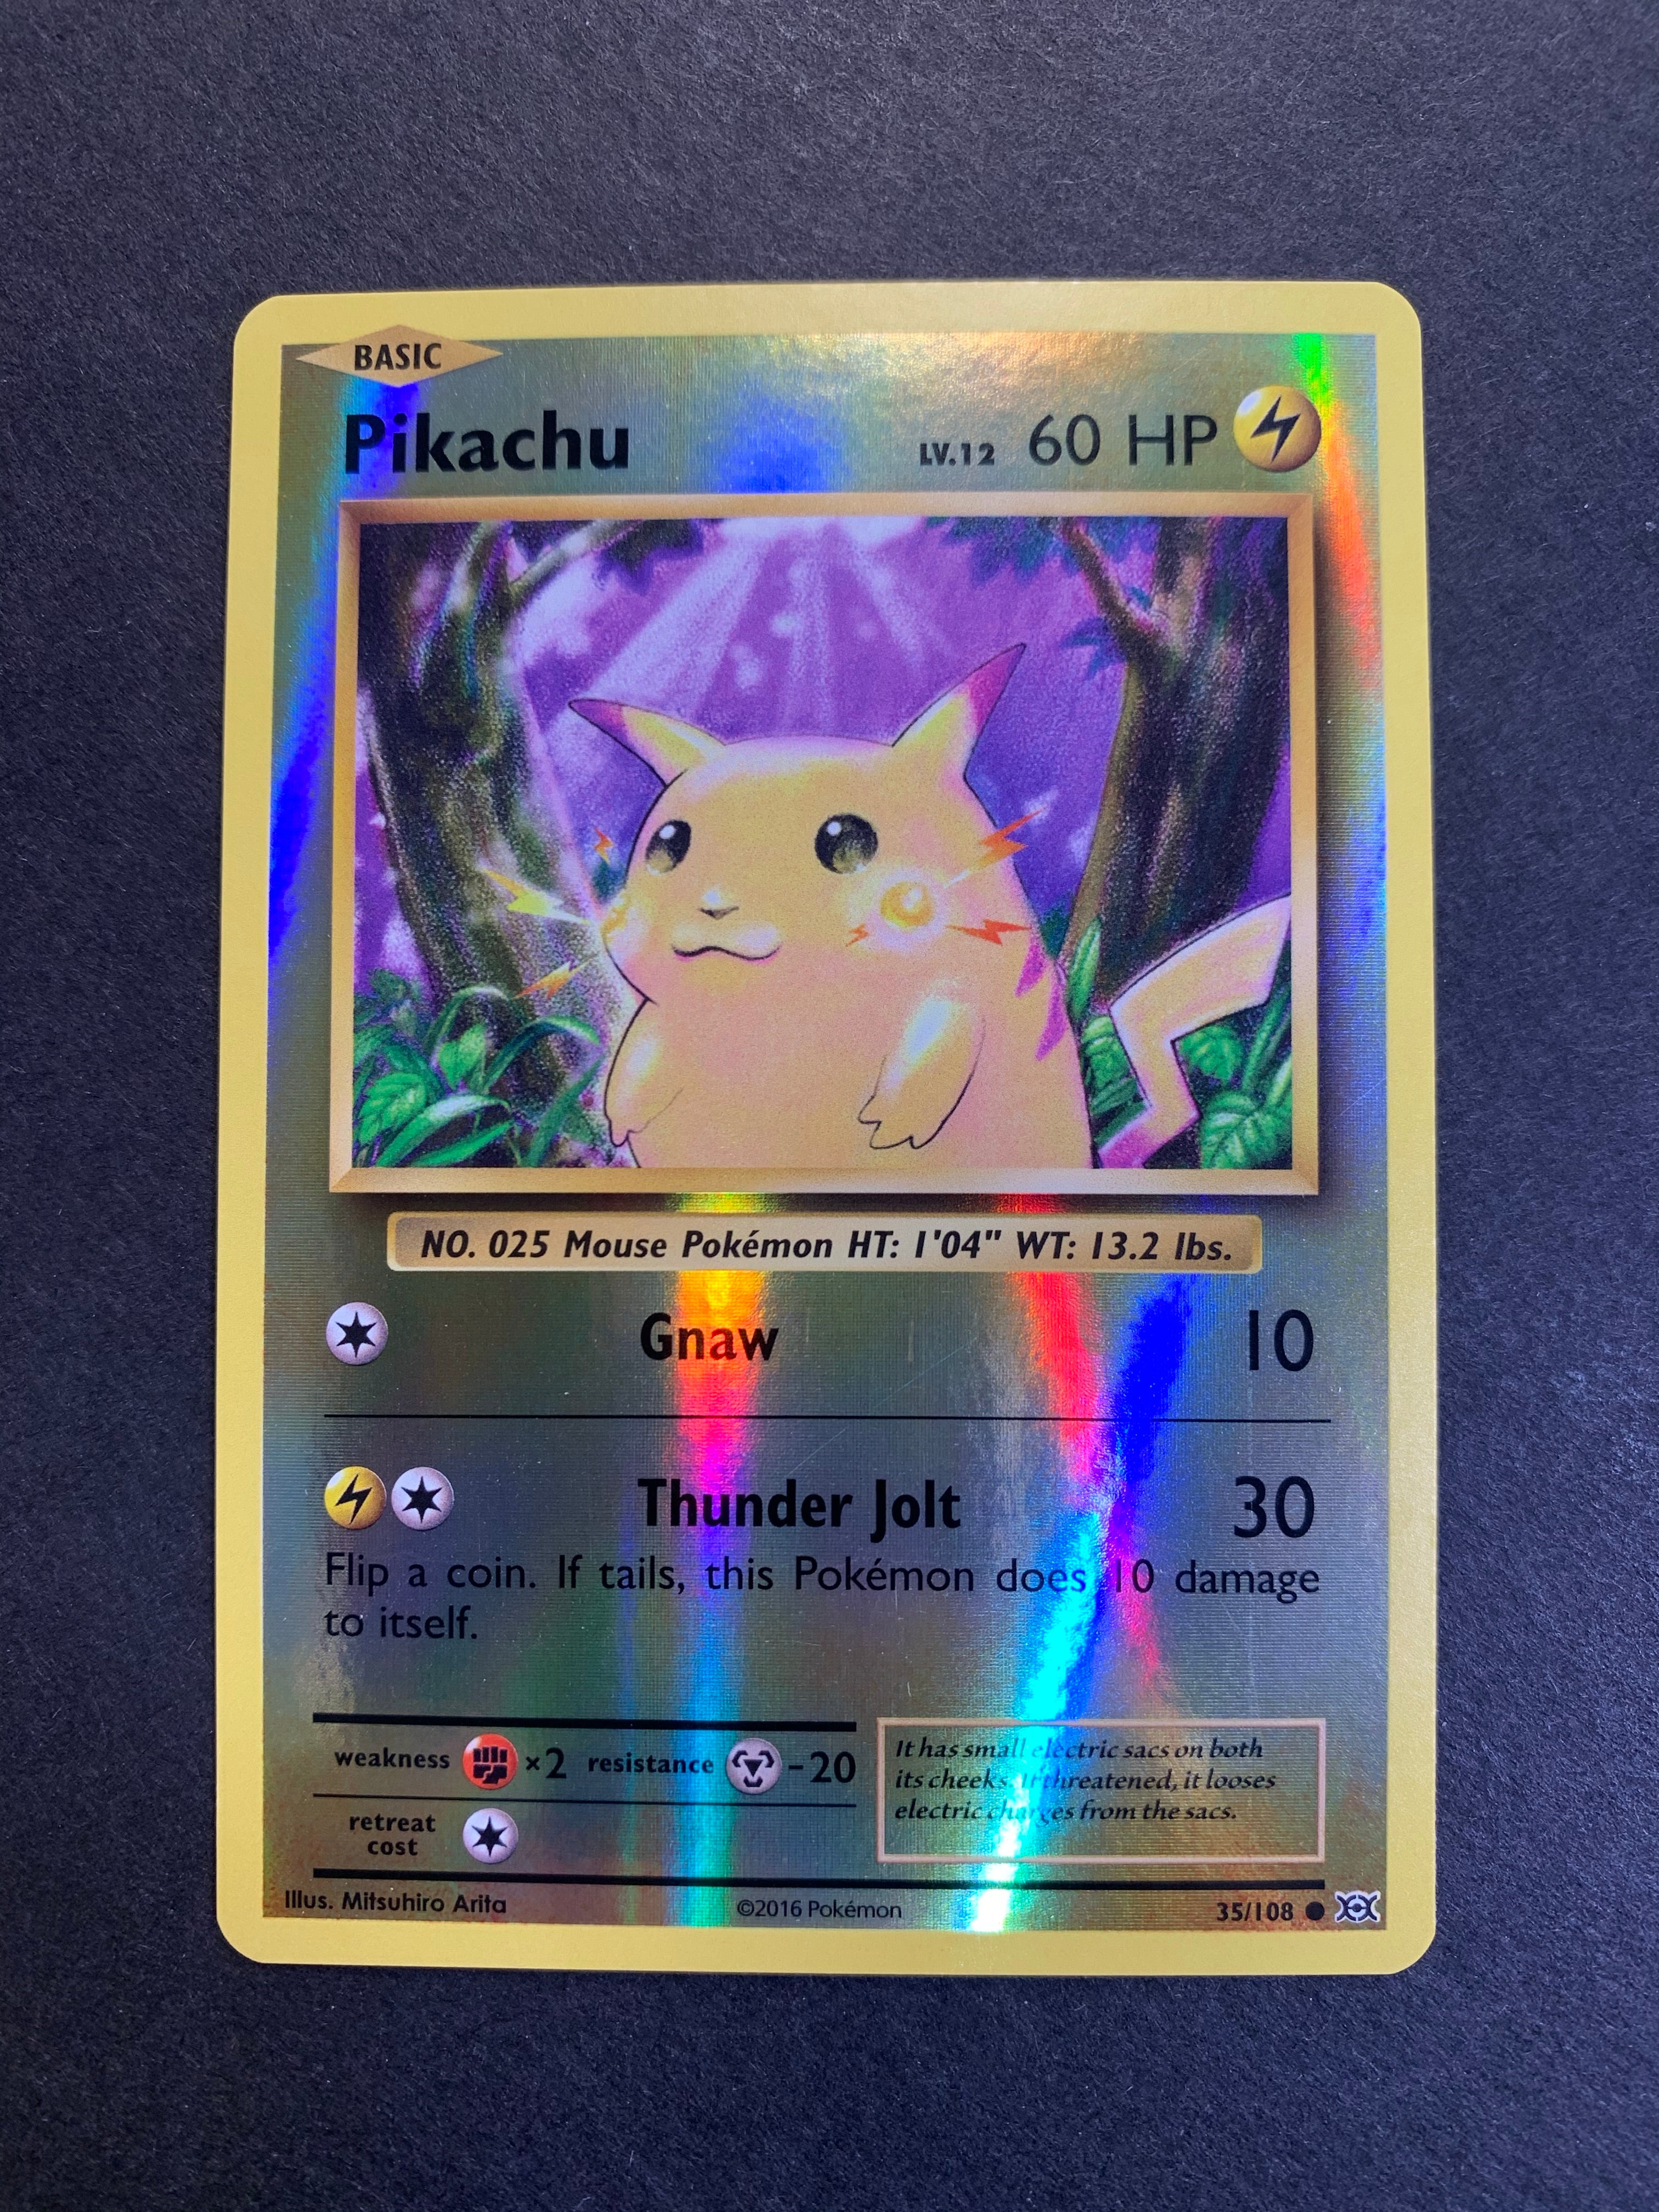 2016 Pikachu Basic LV.12 Holo Rare Pokemon Card